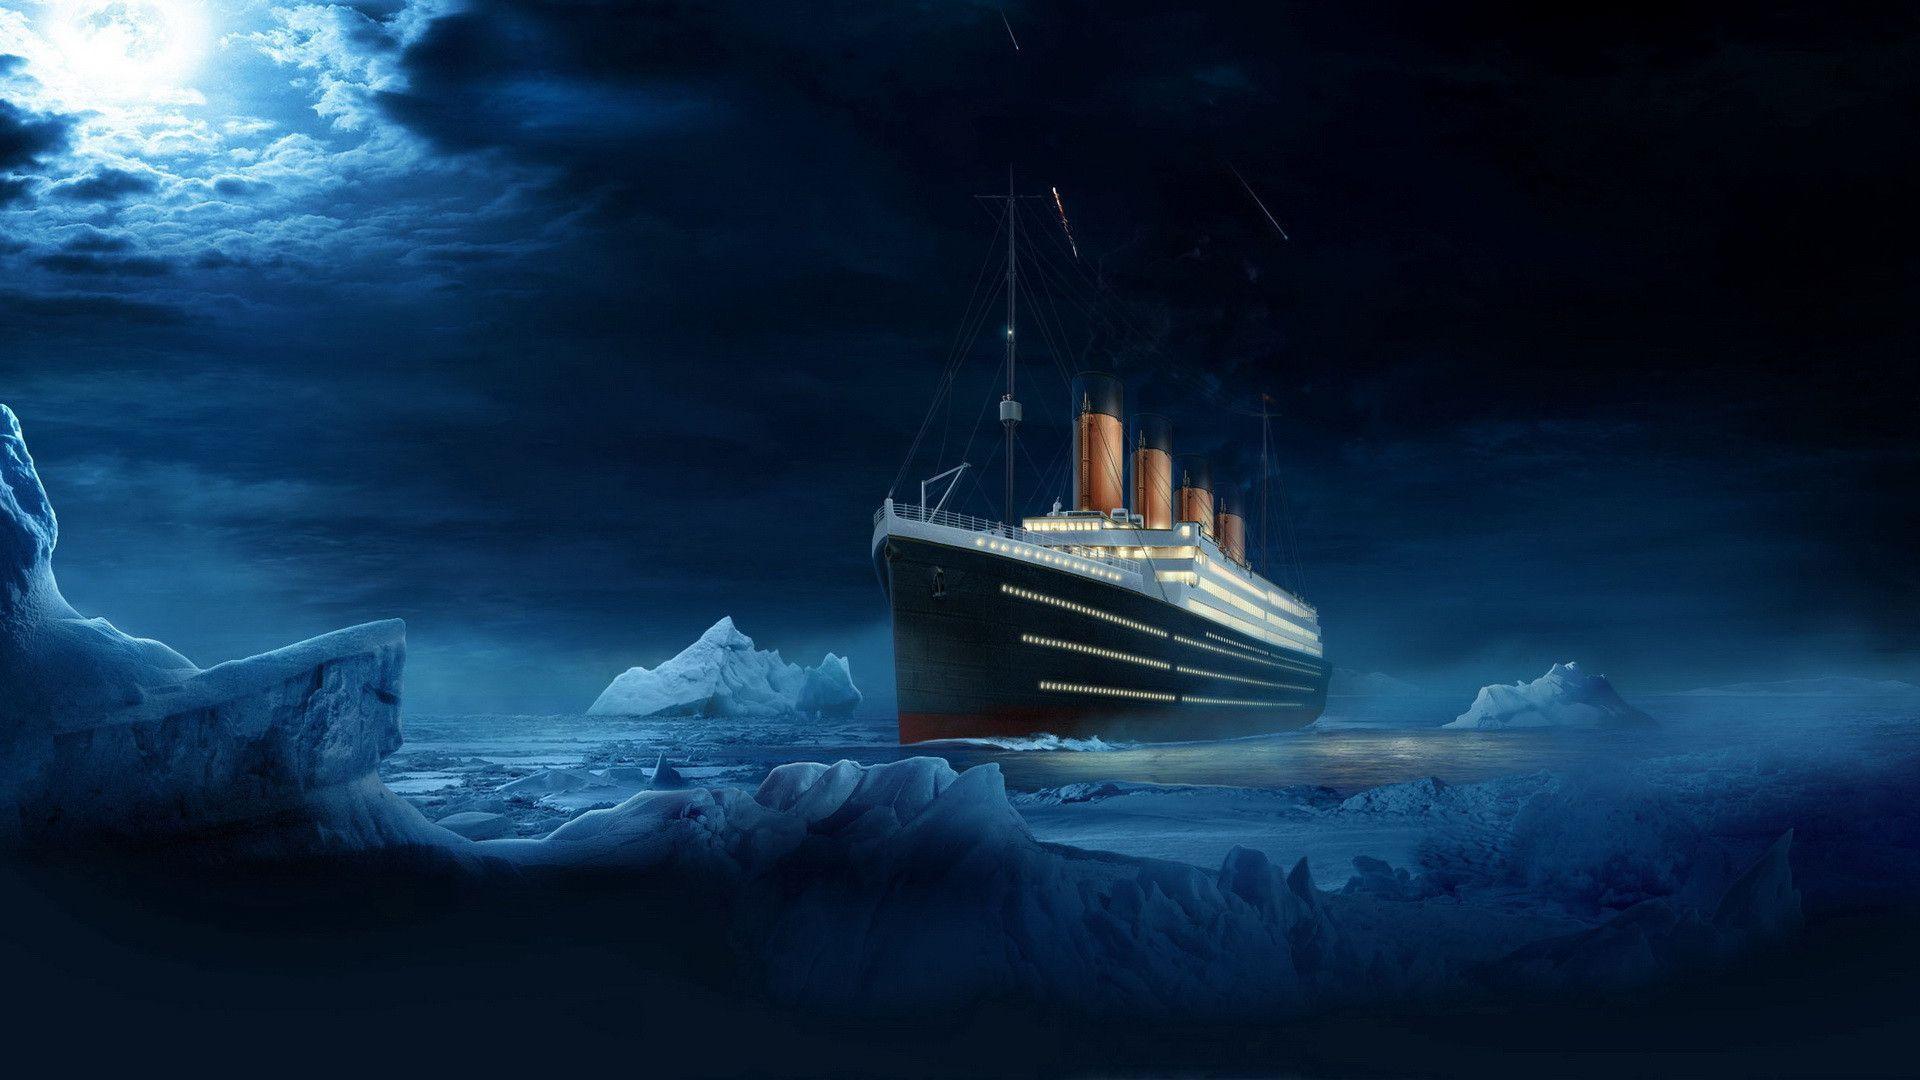 Amazing Titanic Ship Hi Rise Image. Beautiful image HD Picture